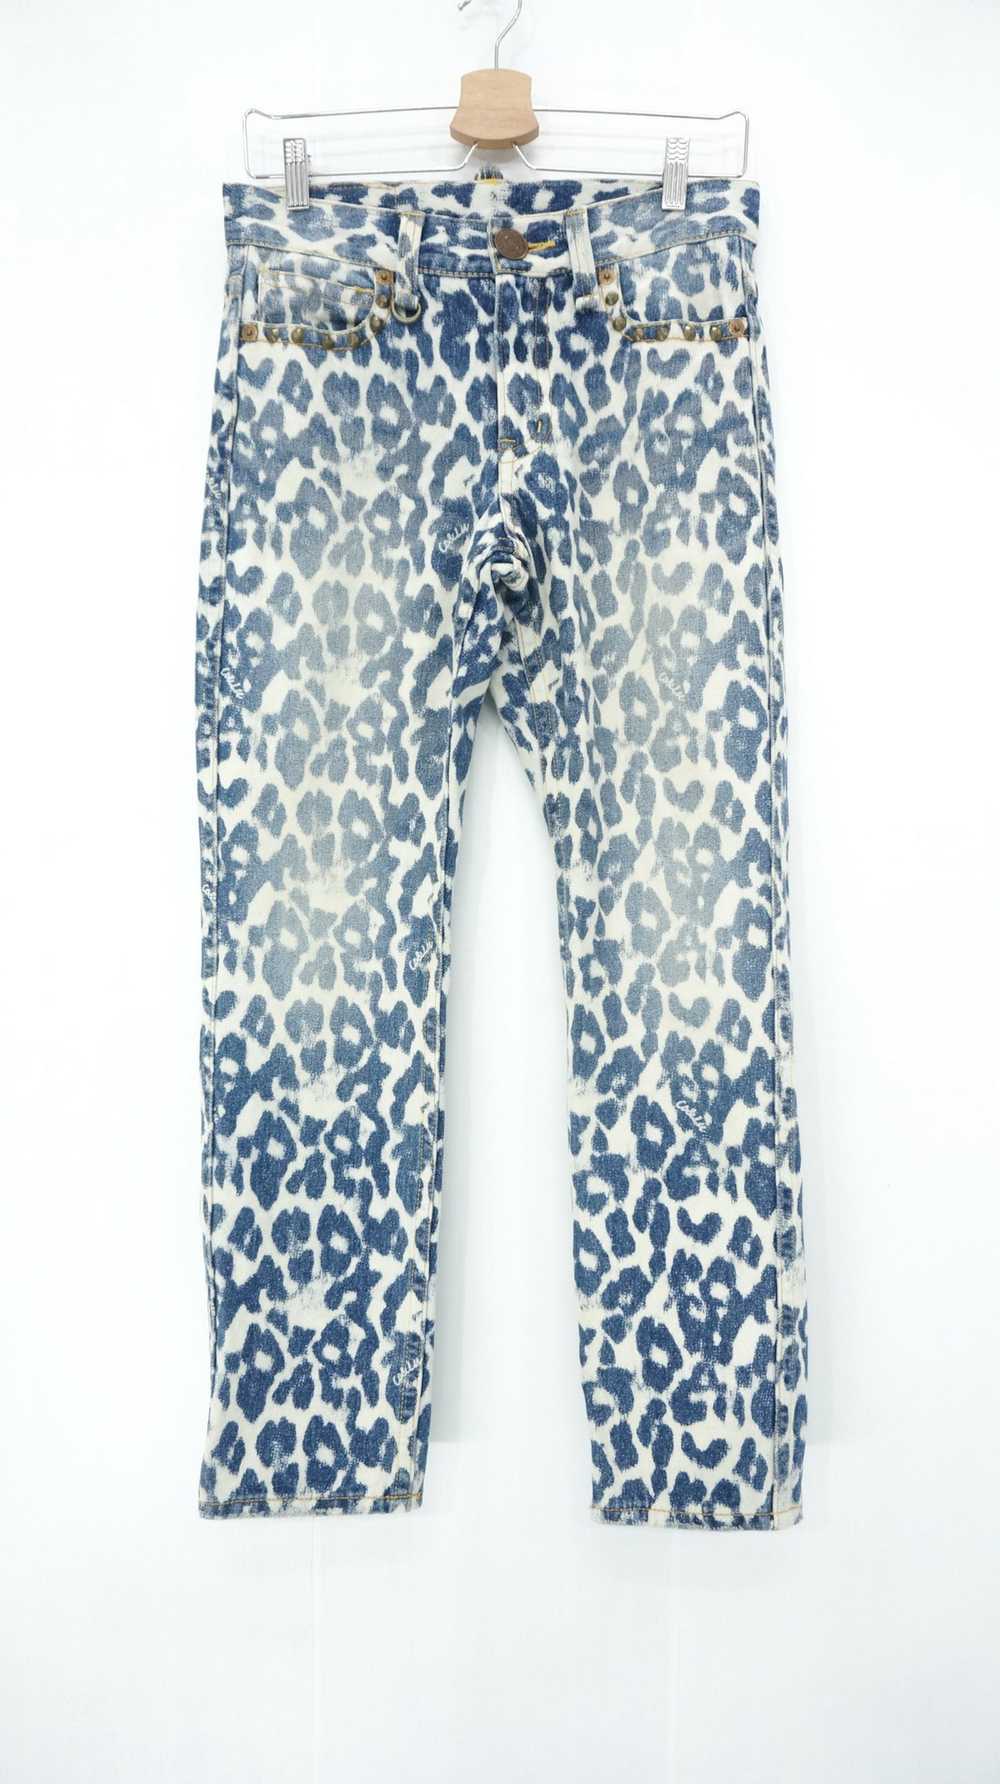 Japanese Brand CO & LU Leopard Print Jeans - image 3